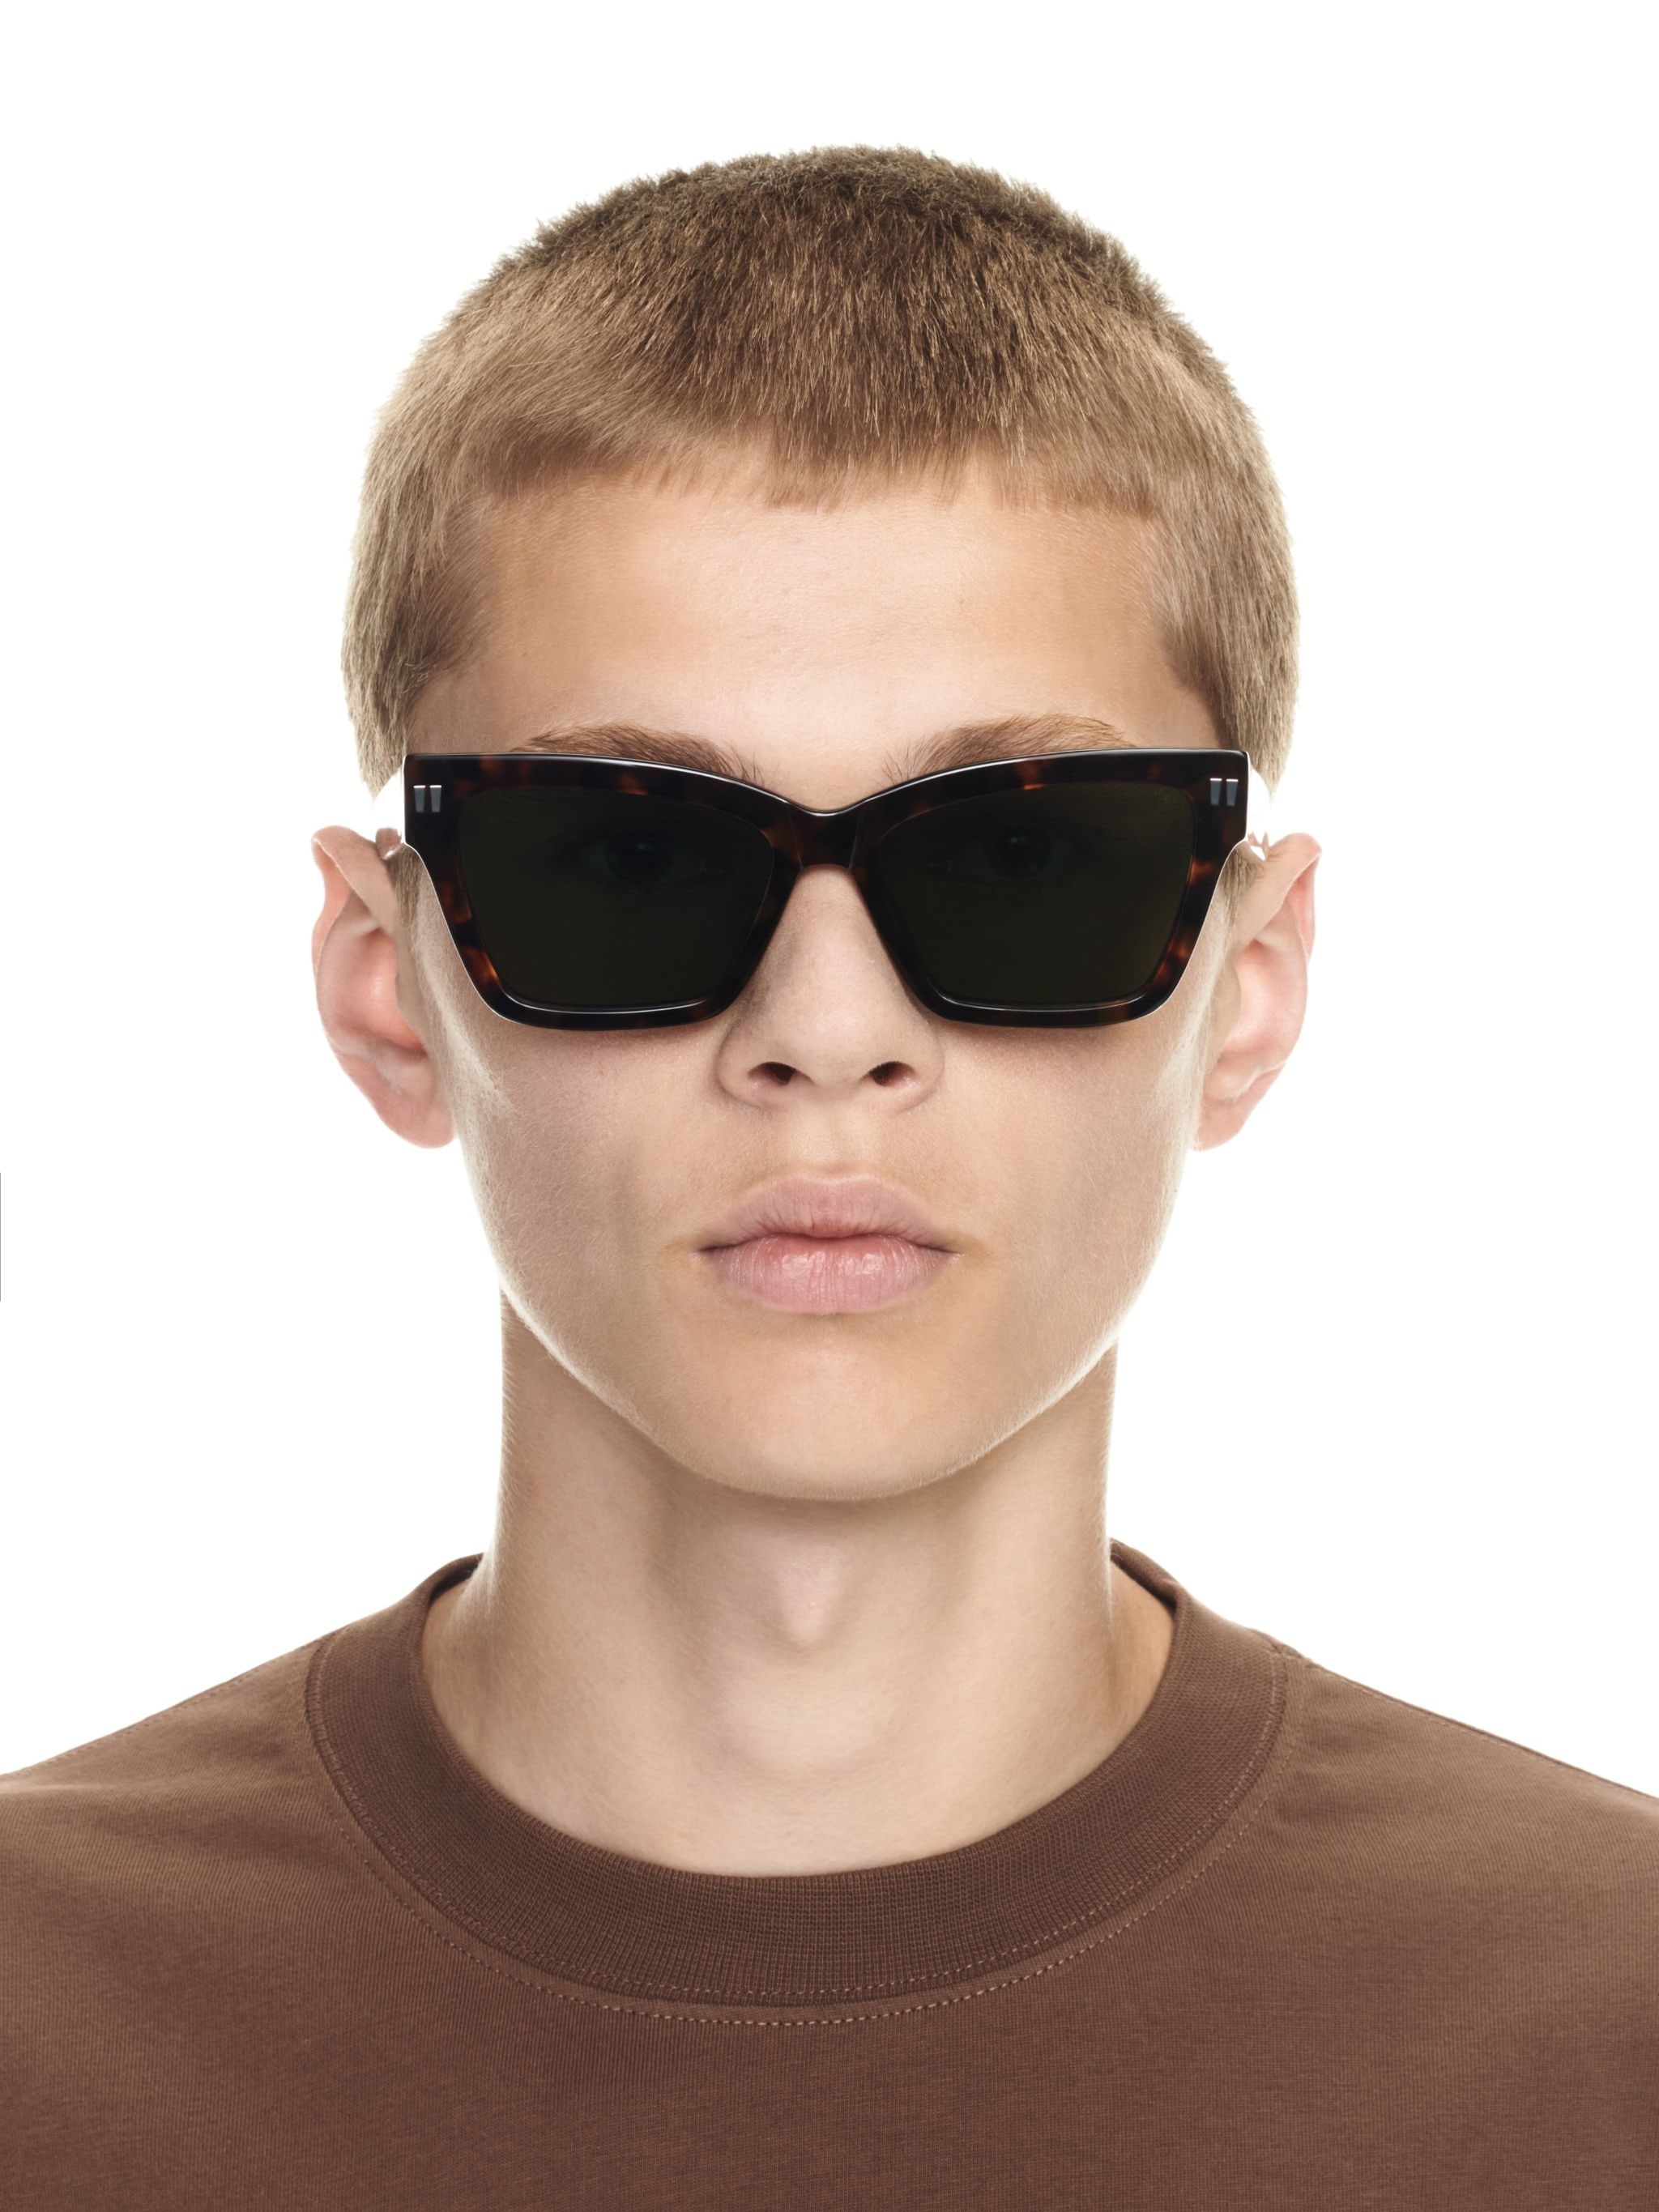 Branson Sunglasses - 4